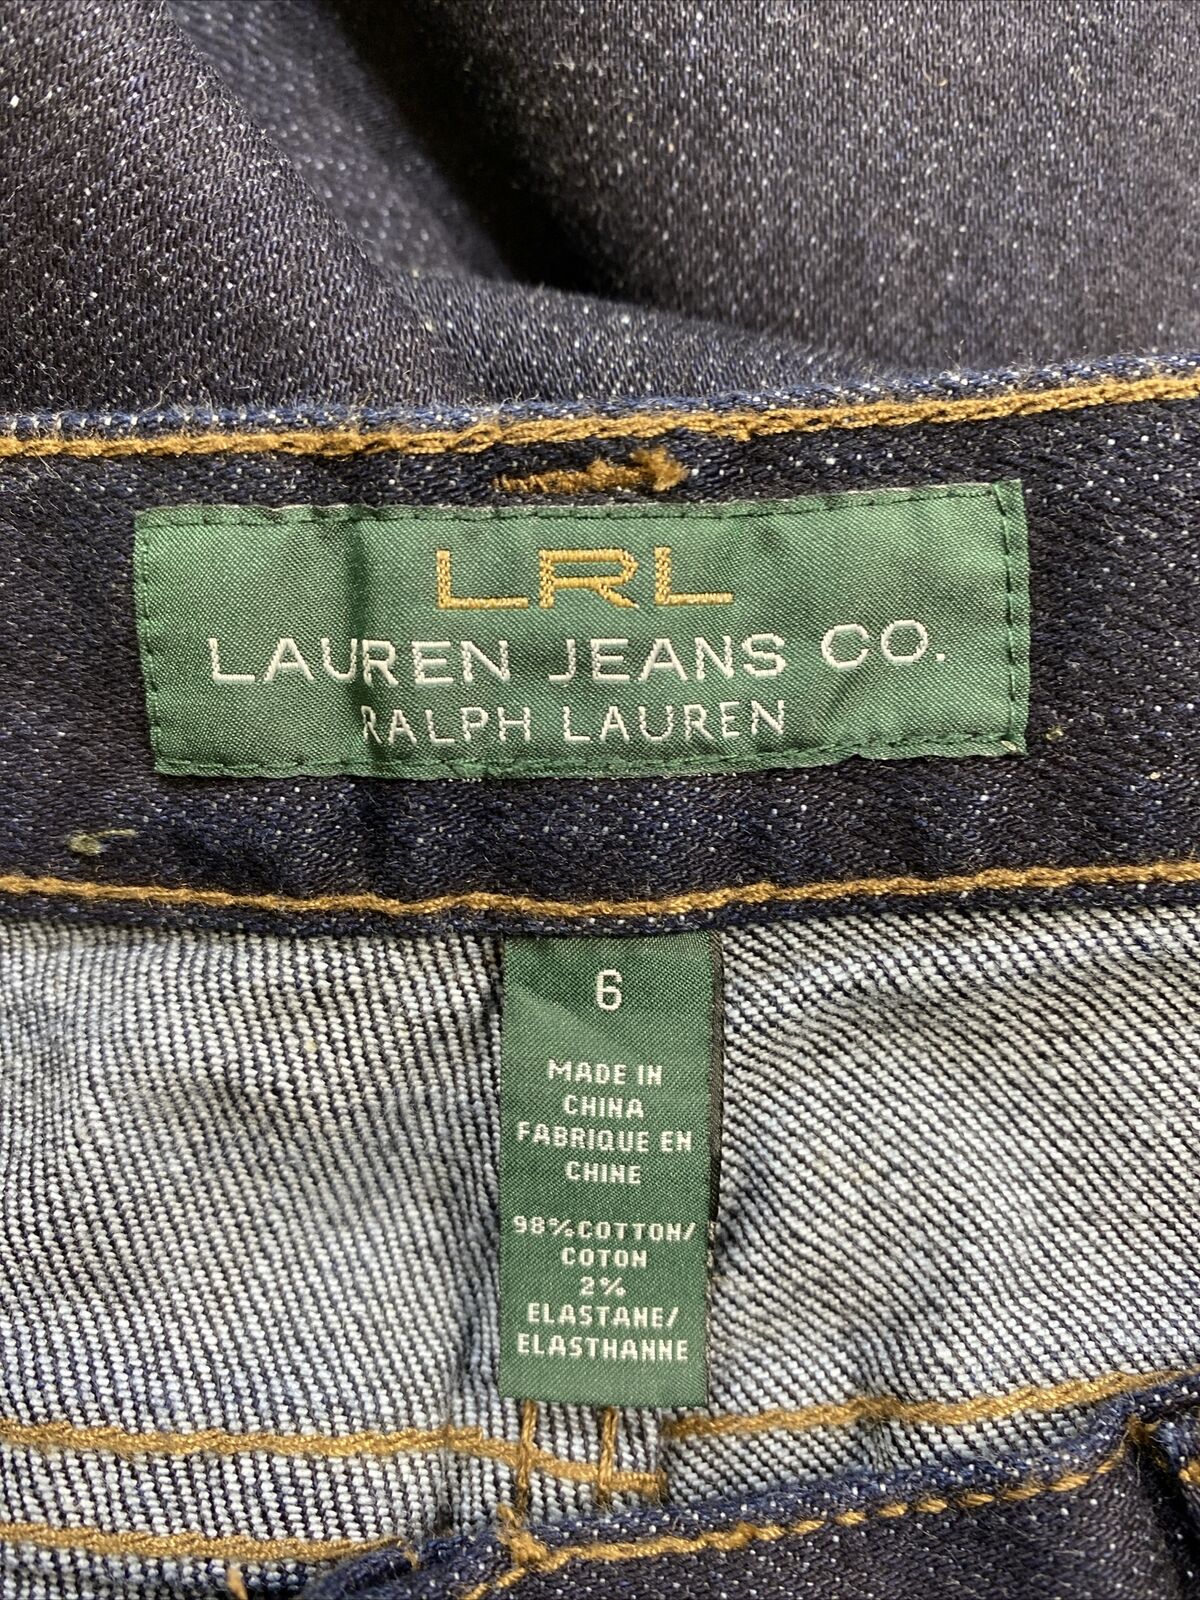 Ralph Lauren Women's Dark Wash Classic Boot Cut Jeans - 6